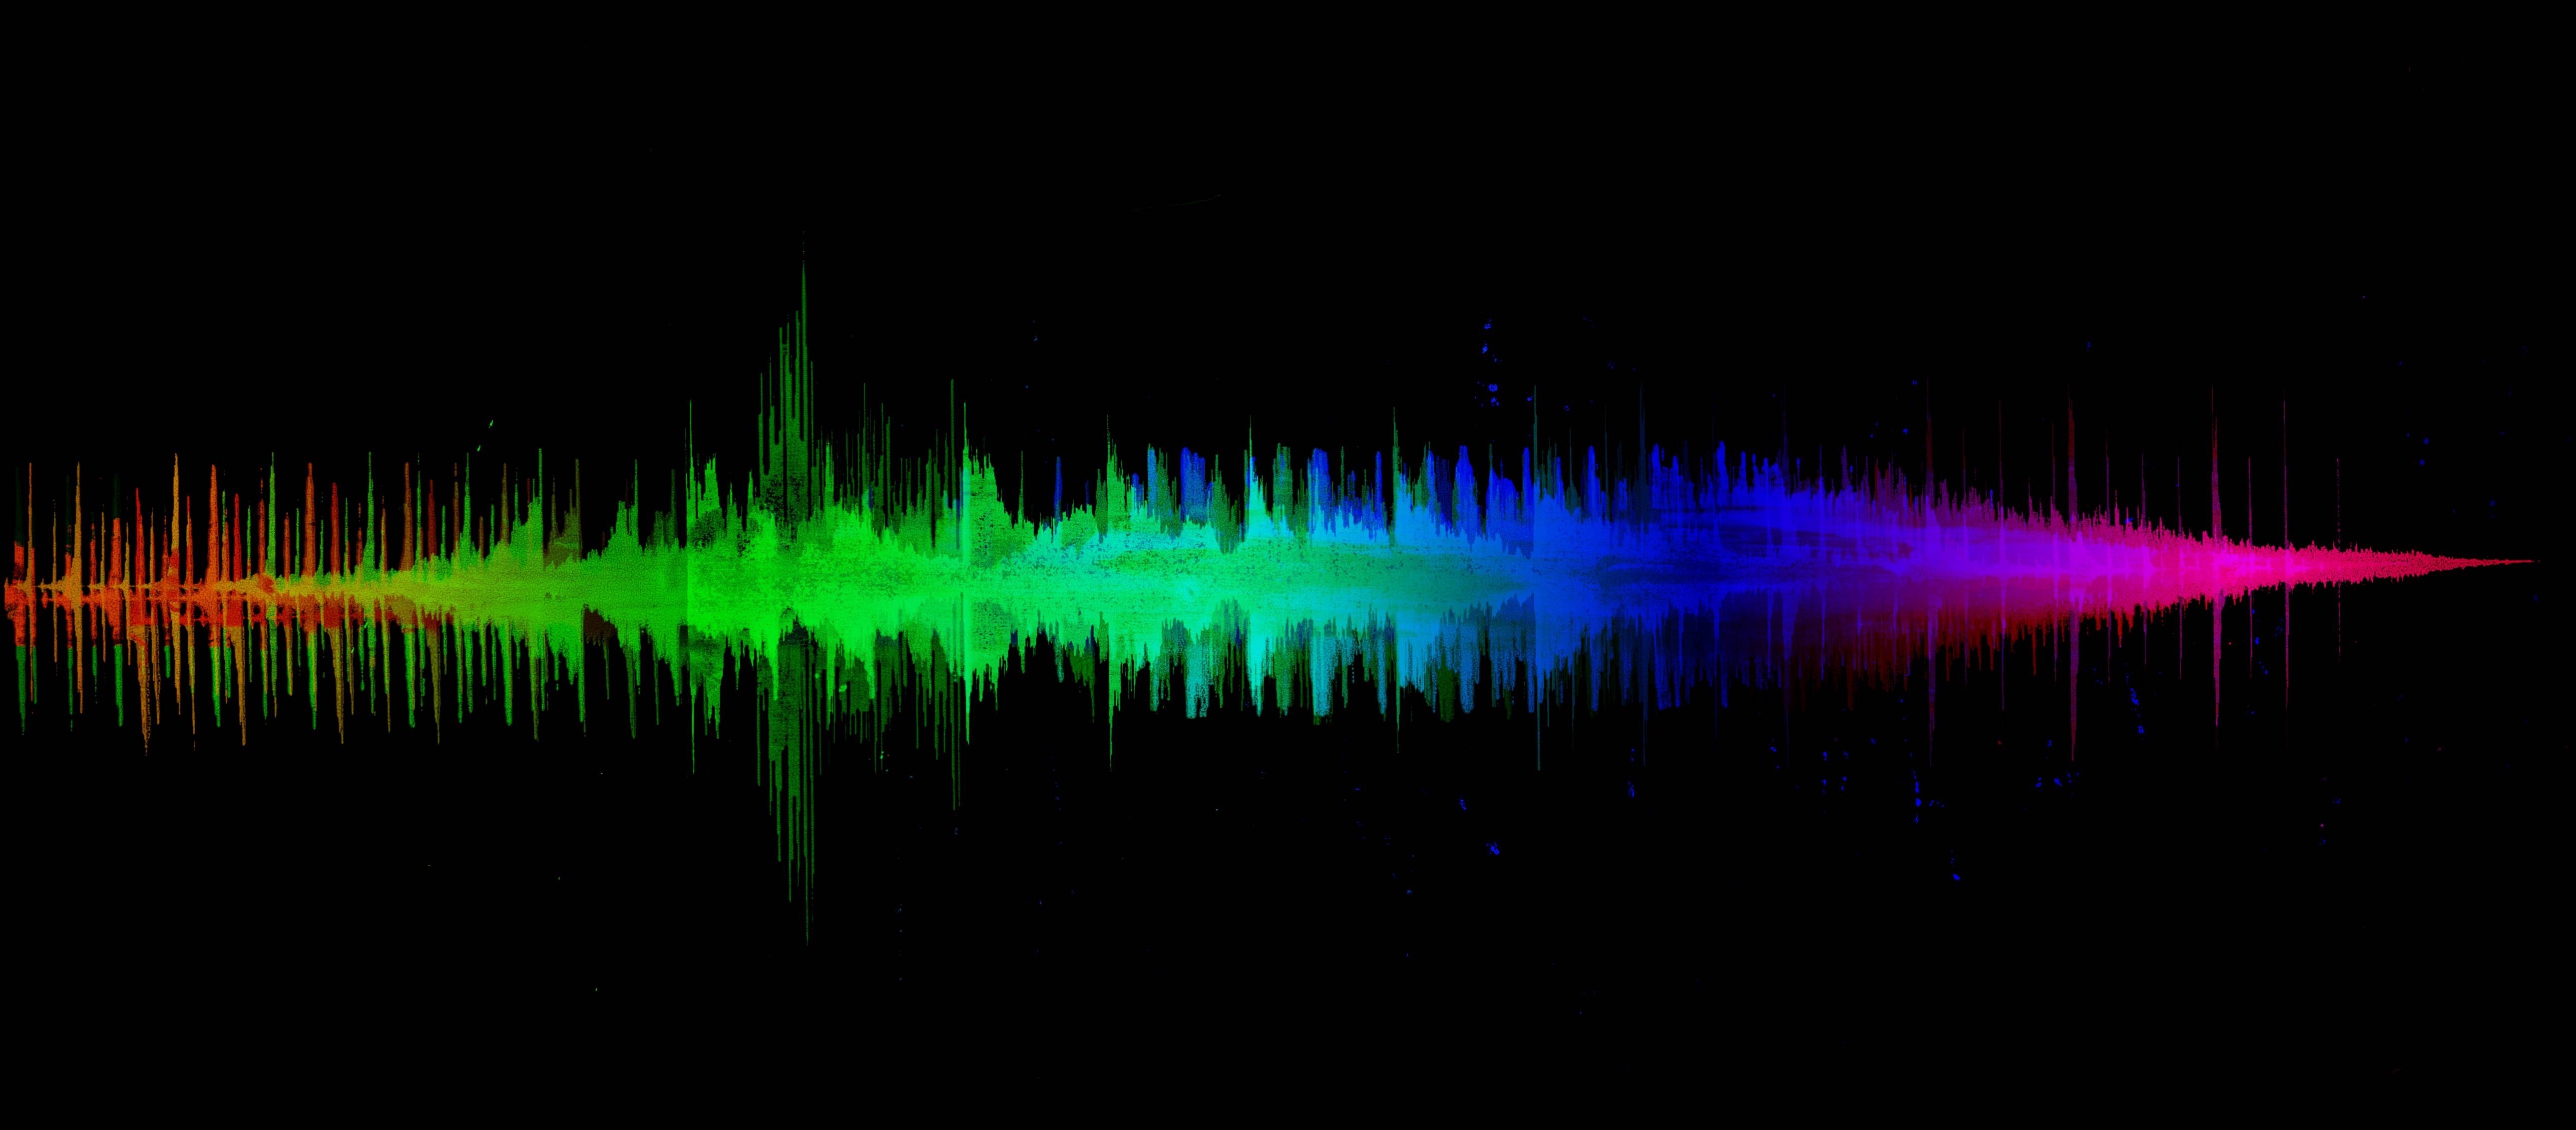 purple soundwave background